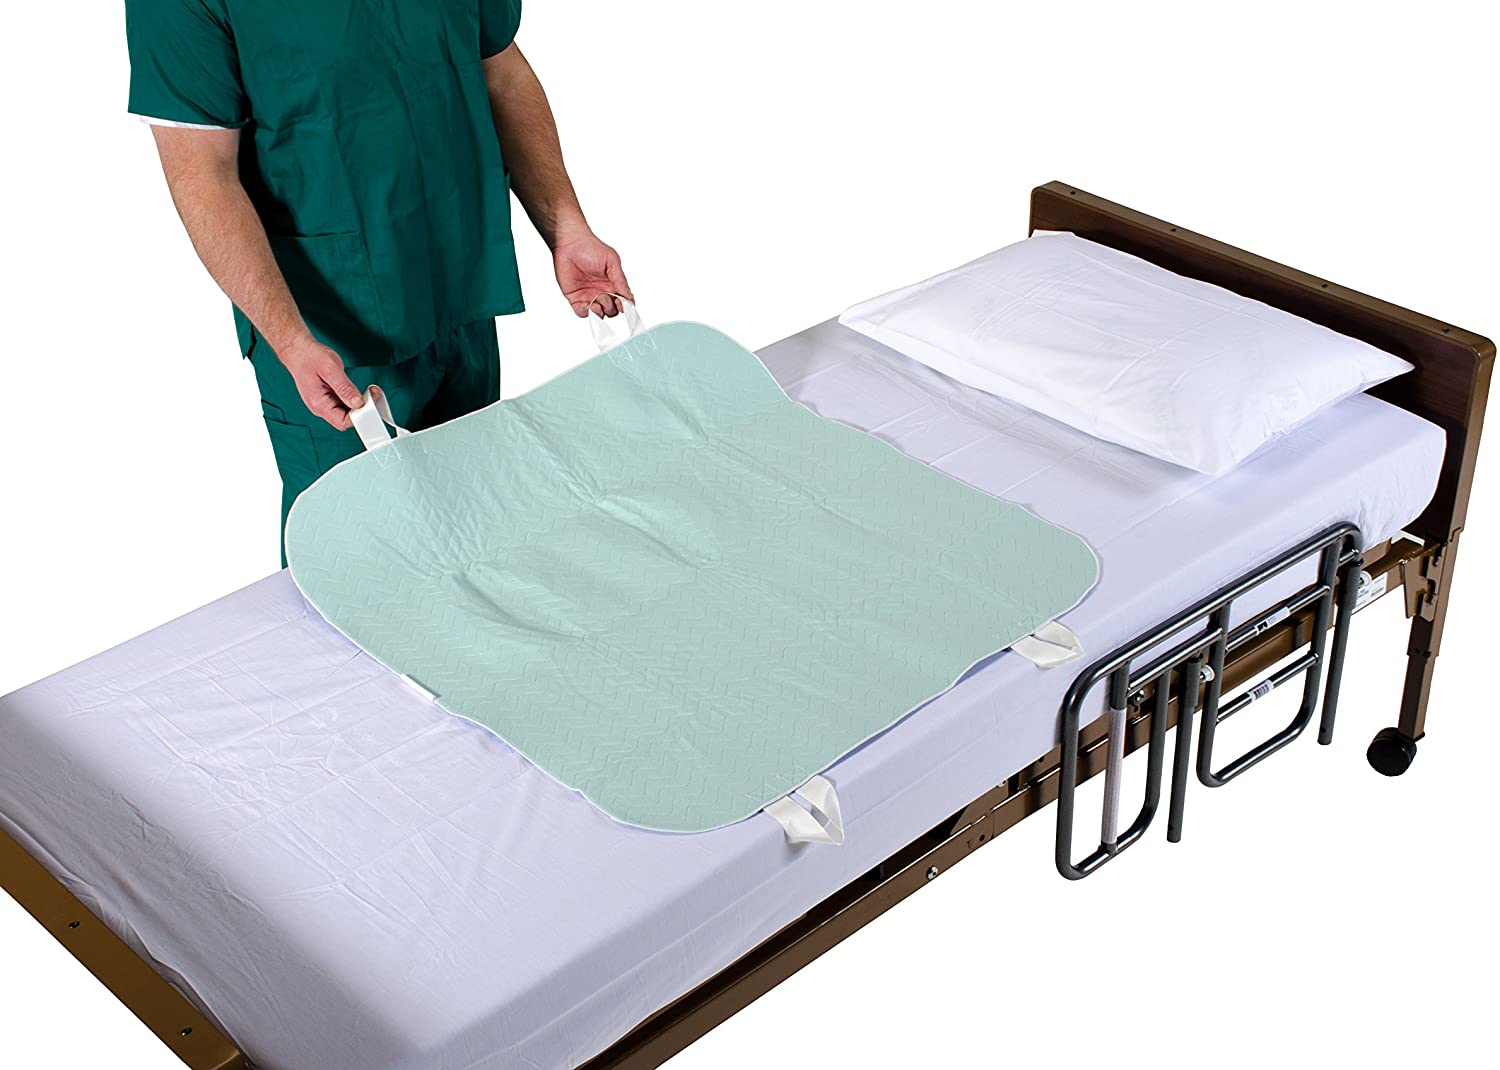 hospital mattress pad 80inches long